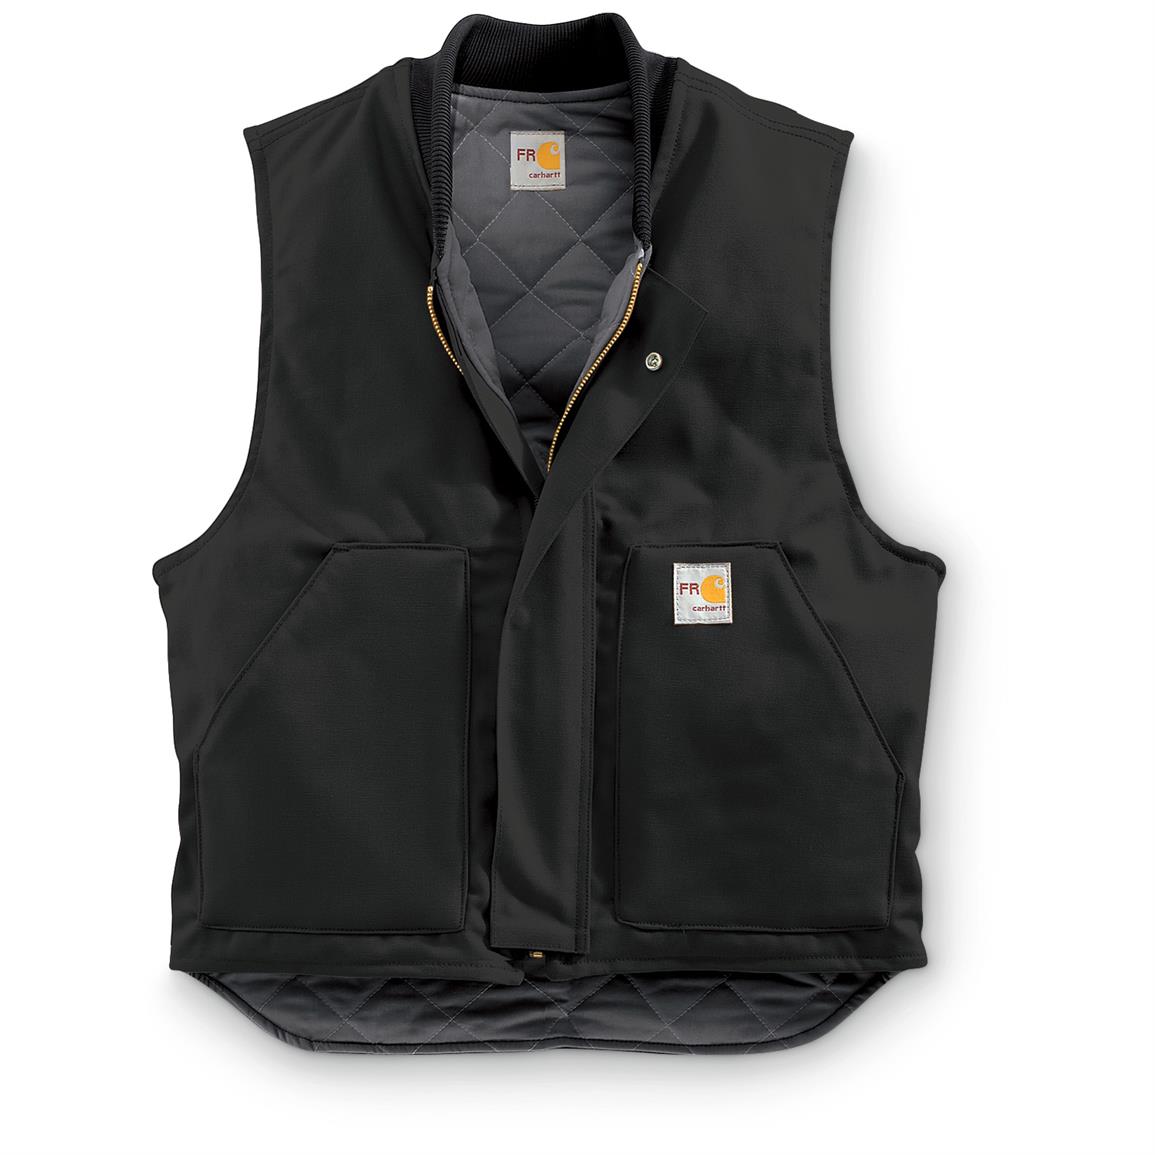 Men's Carhartt Duck Vest - 655005, Vests at Sportsman's Guide